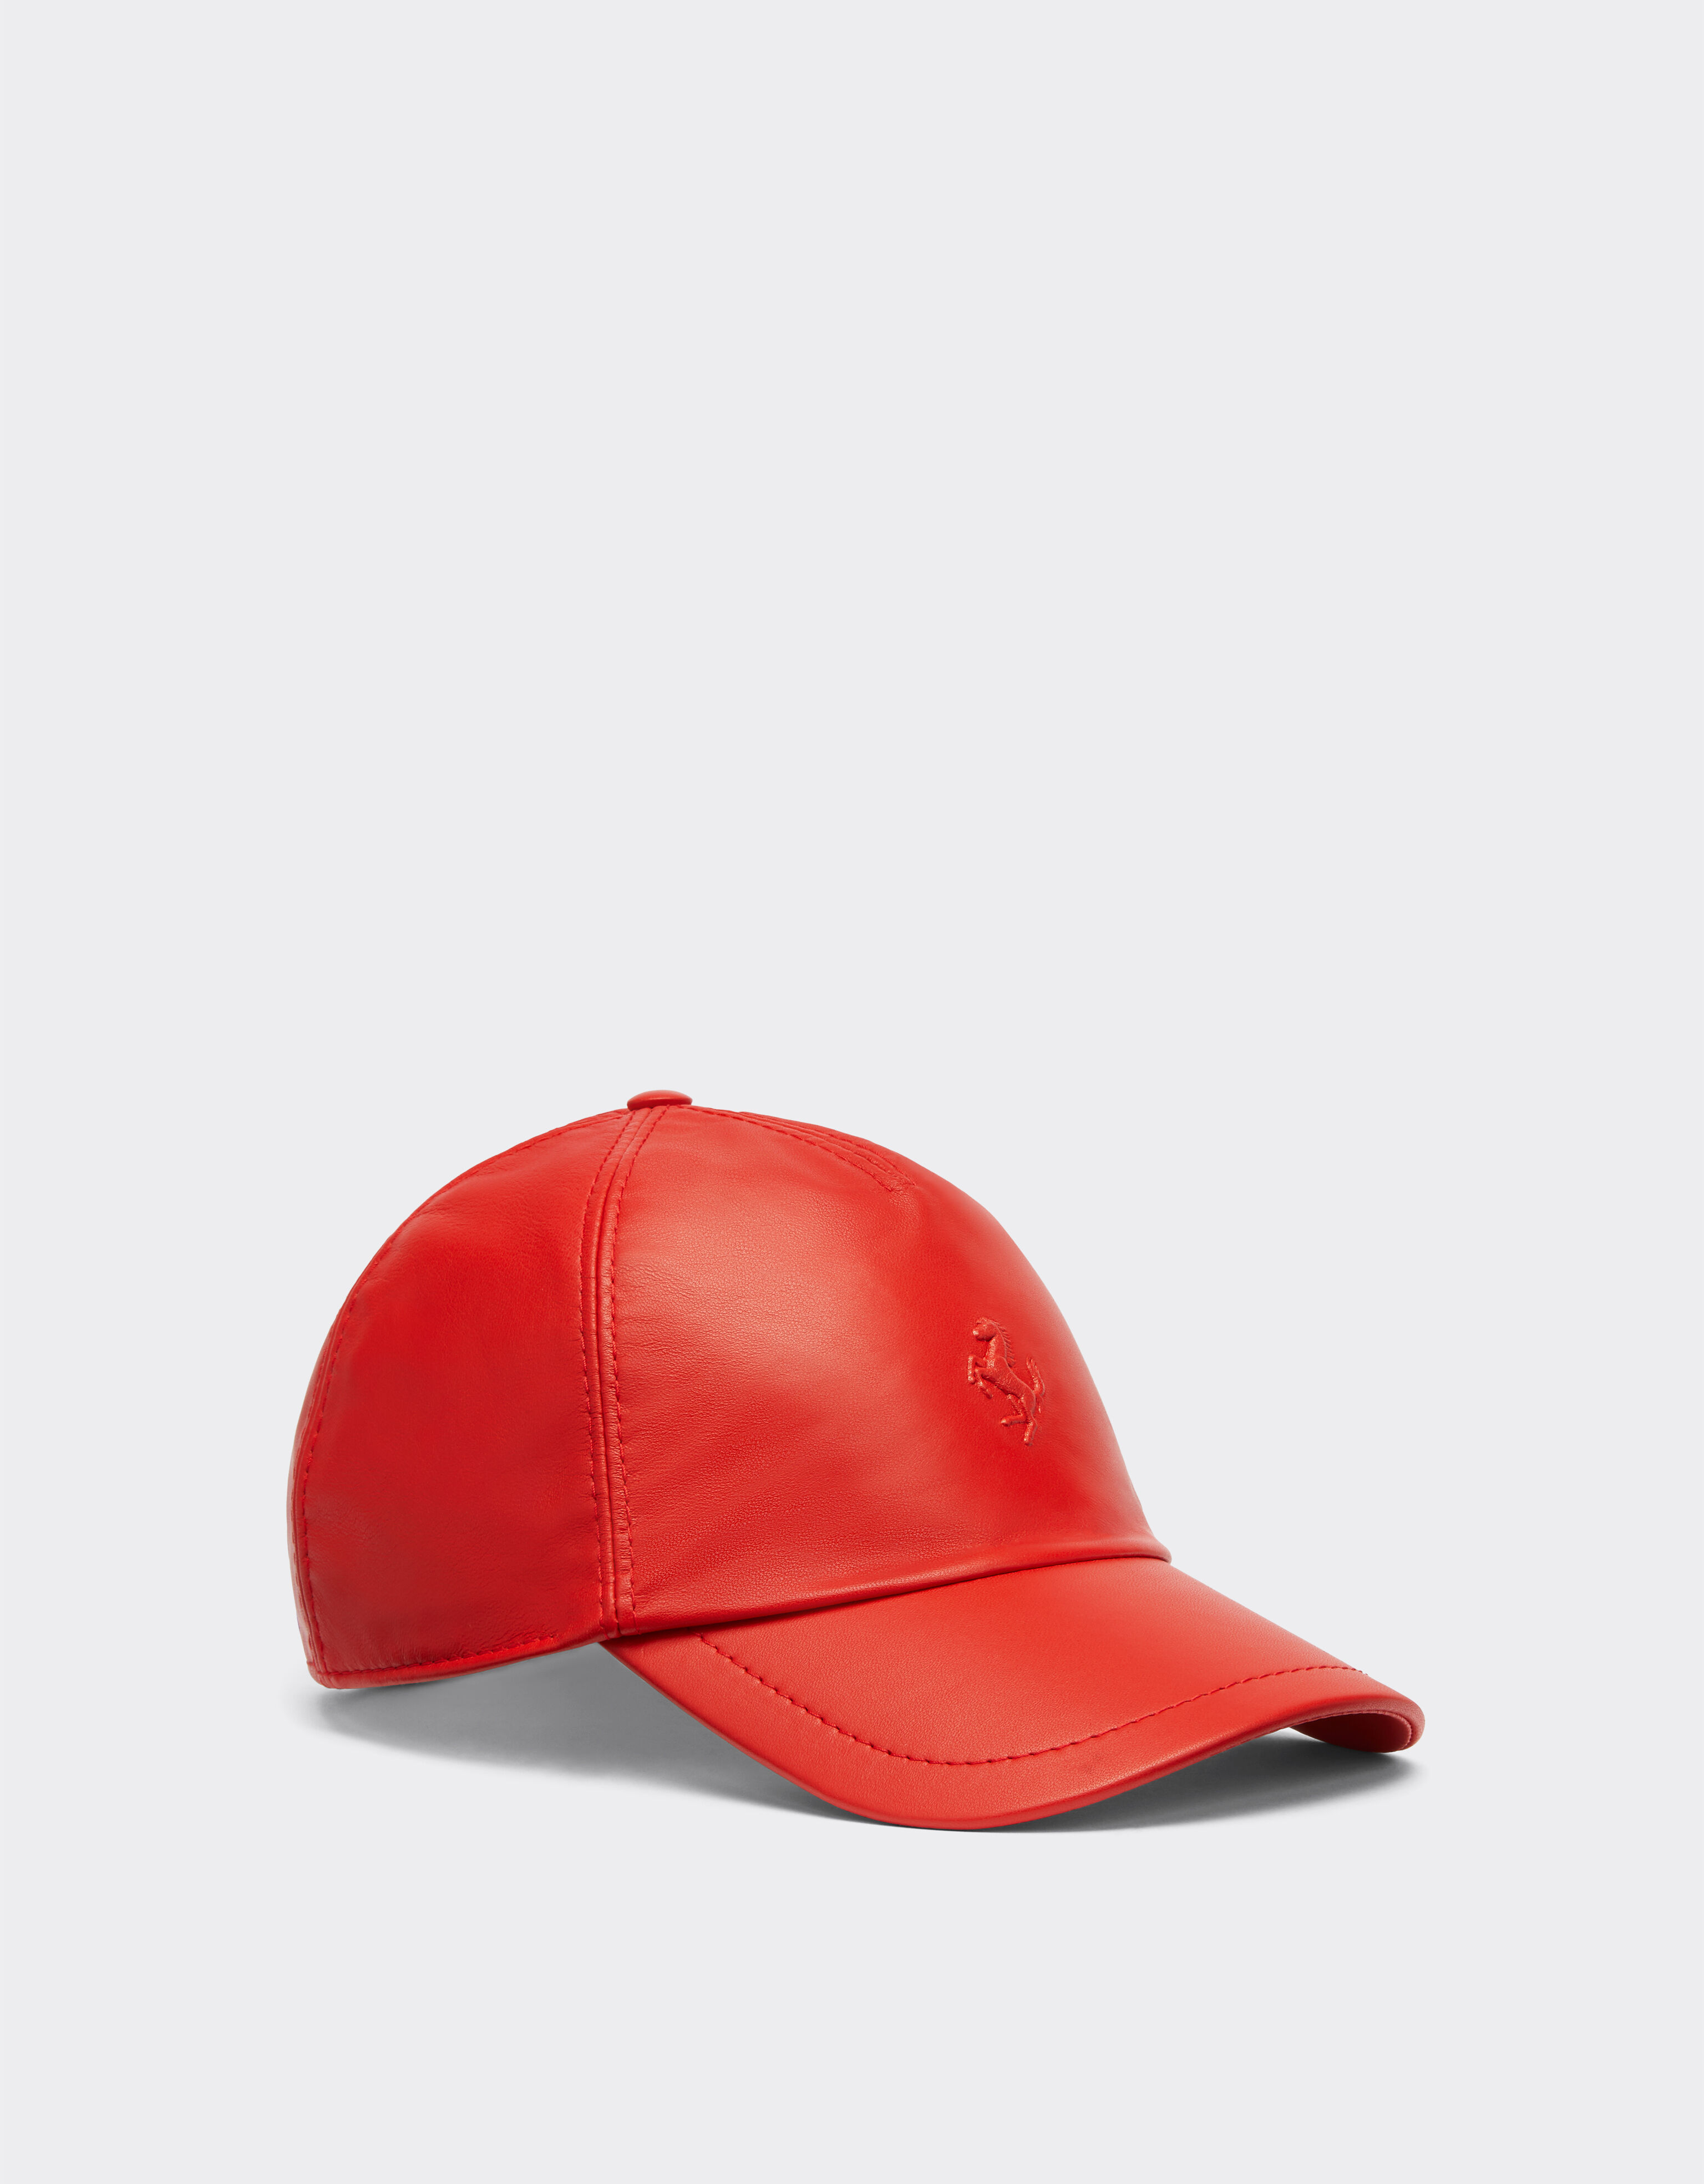 Ferrari Baseball cap with Prancing Horse logo Rosso Corsa 20264f